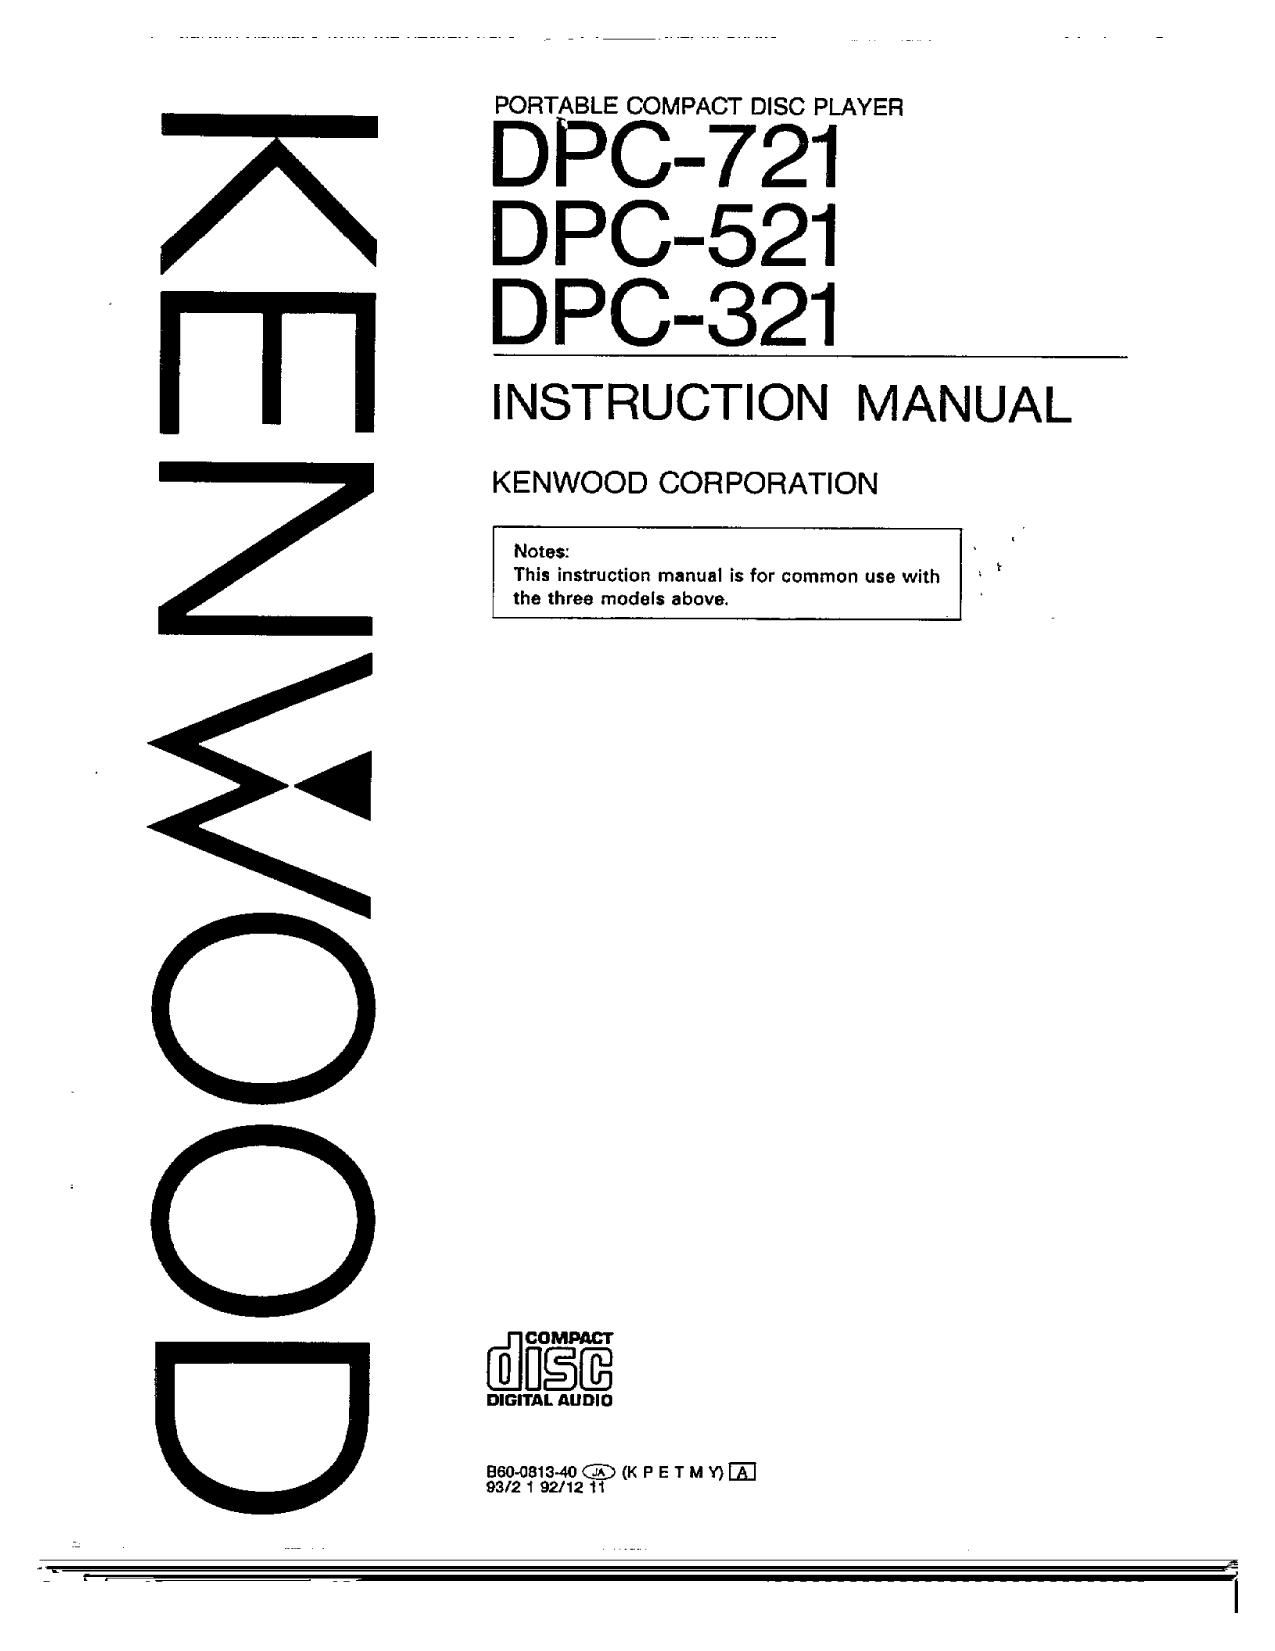 Kenwood DPC 721 Owners Manual